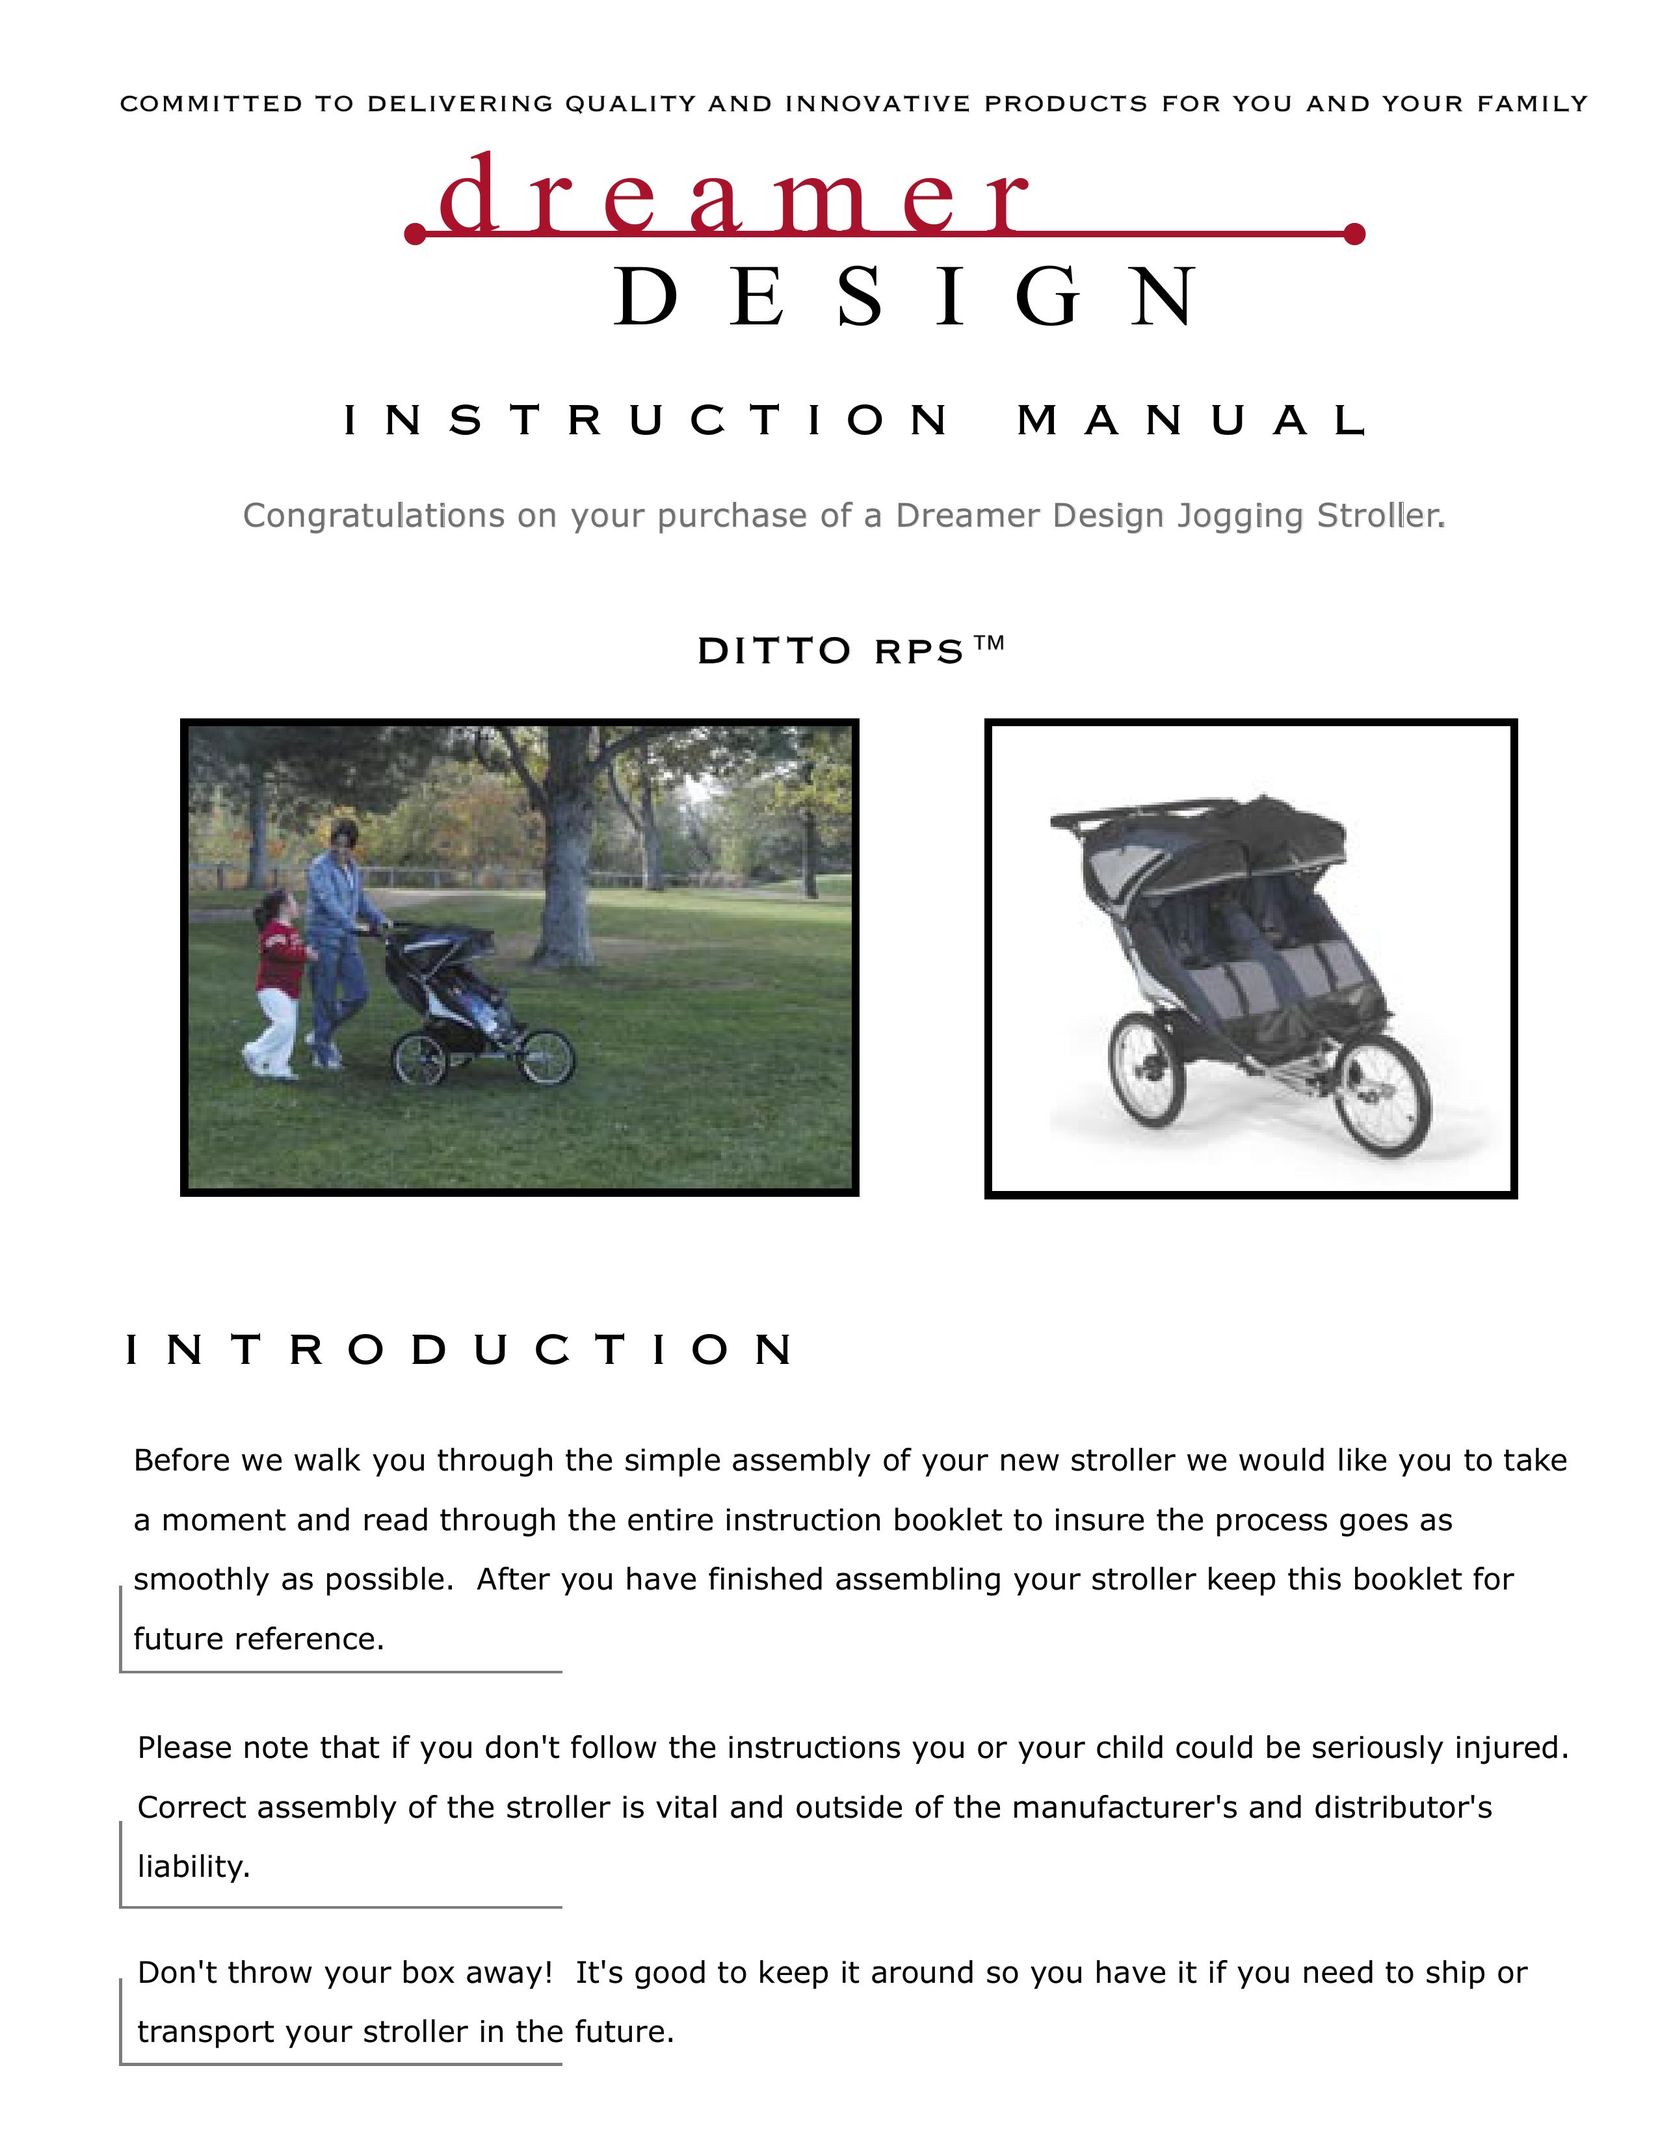 Dreamer Design Ditto RPS Stroller User Manual